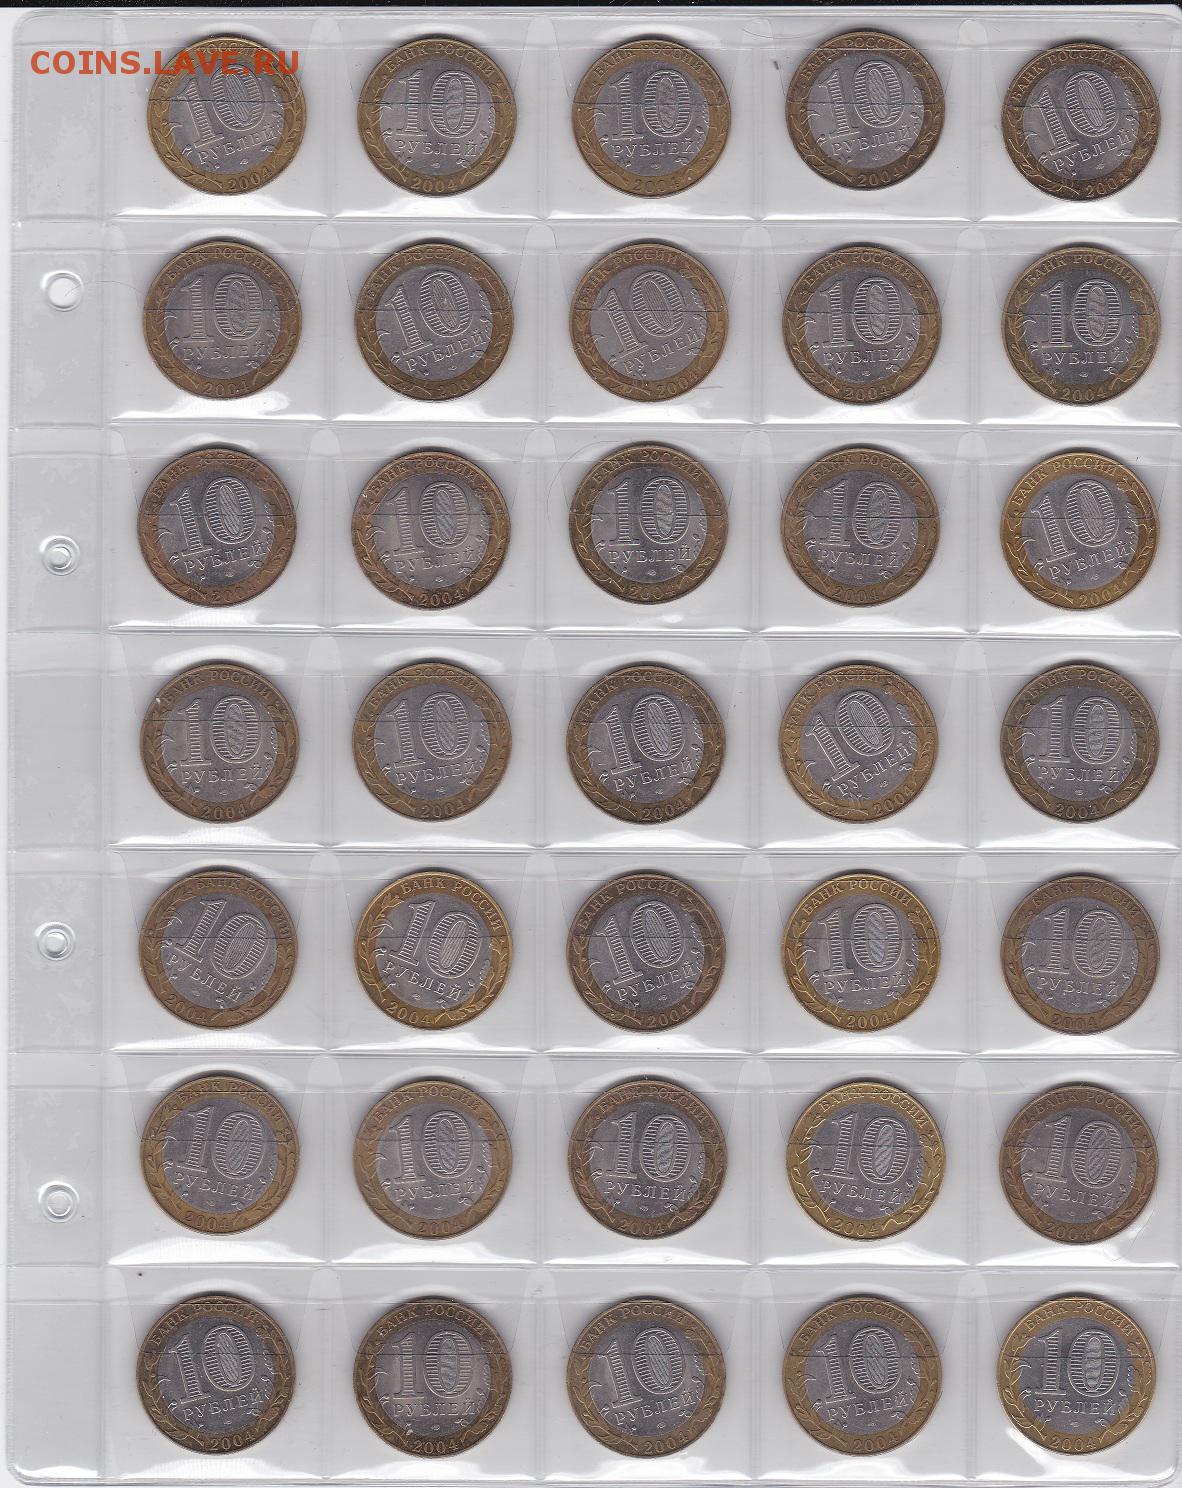 У ани 35 монет по 2 рубля. Монеты Биметалл 10 рублей UNC. Коллекция 10 рублевых монет 107. Биметаллические монеты ЧЯП. Полная коллекция 10 рублевых монет Биметалл.